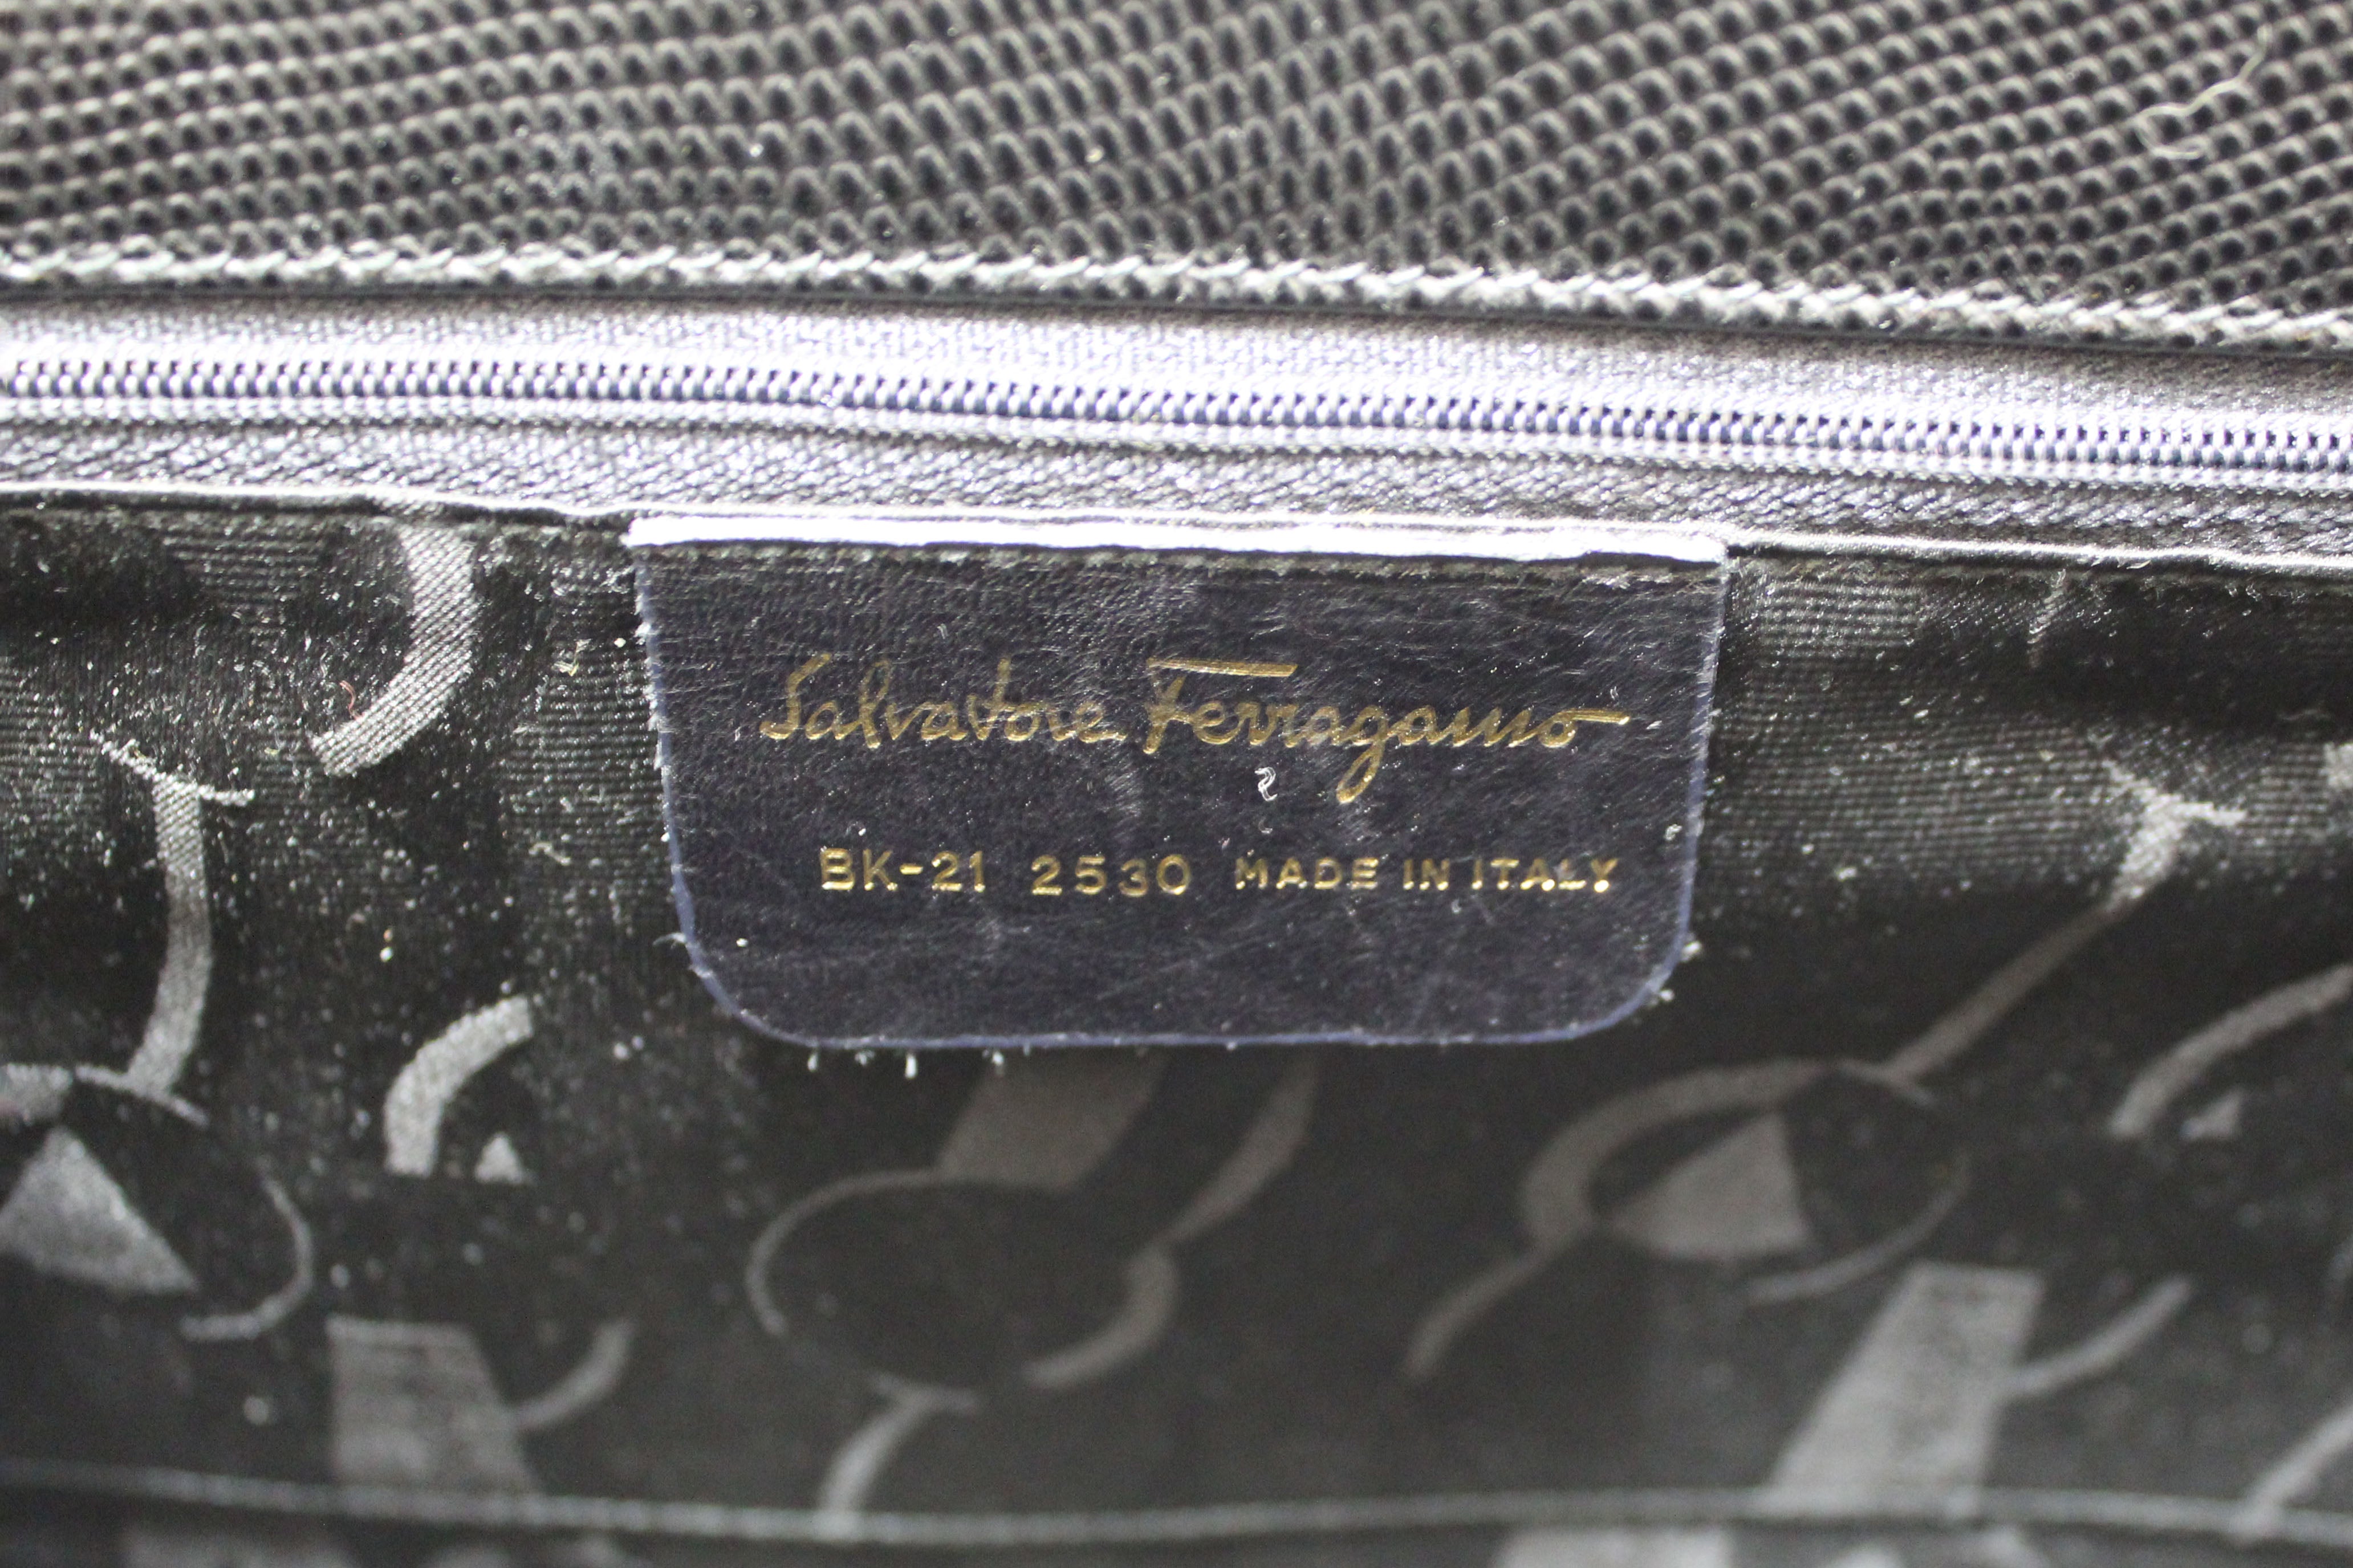 Authentic Salvatore Ferragamo Vintage Black Leather Vala Tote Bag